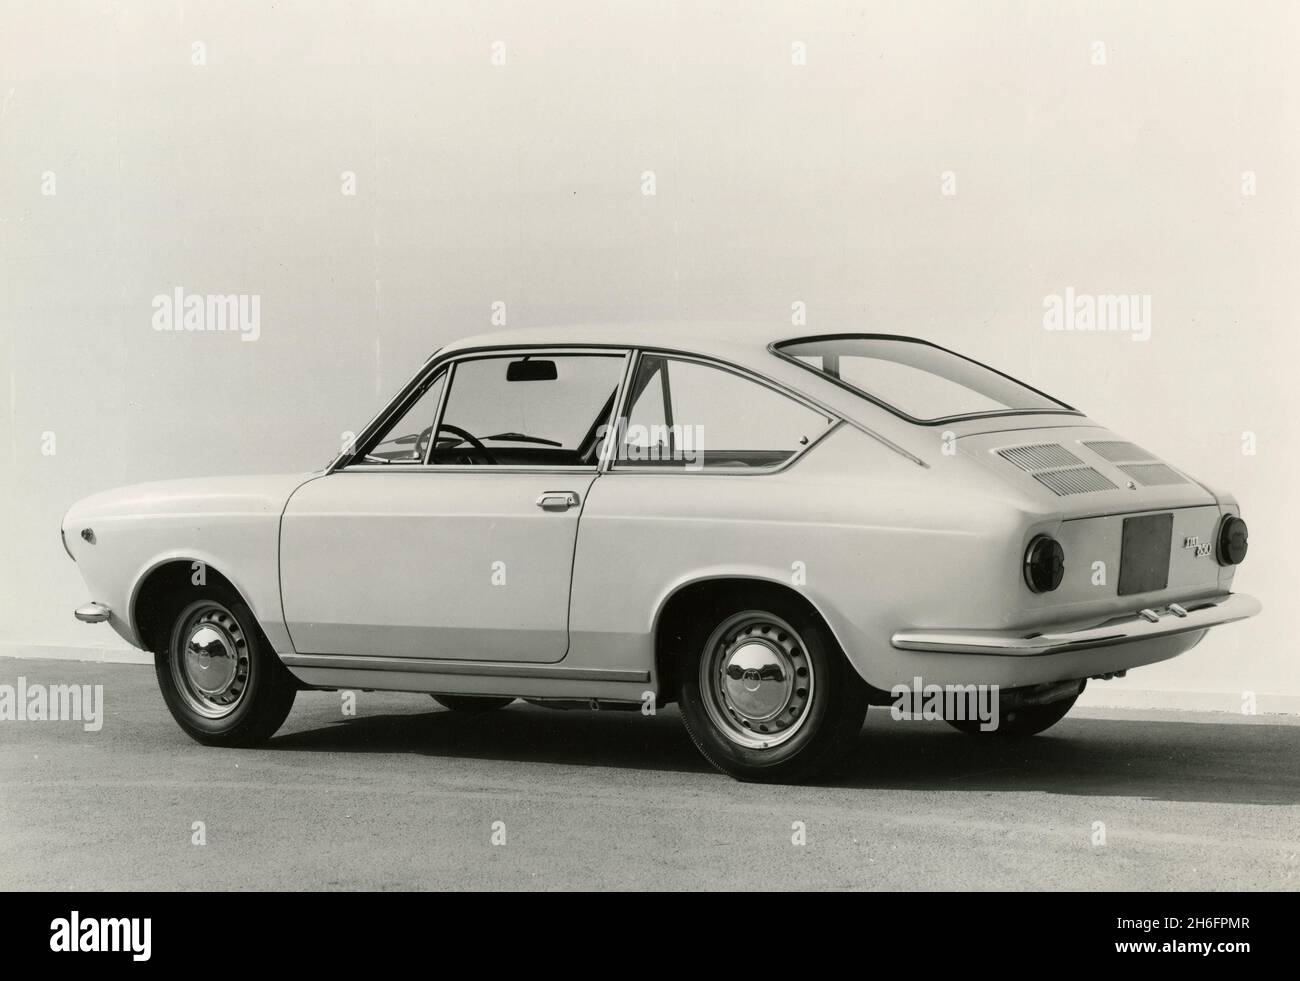 Fiat 850 coupe -Fotos und -Bildmaterial in hoher Auflösung – Alamy